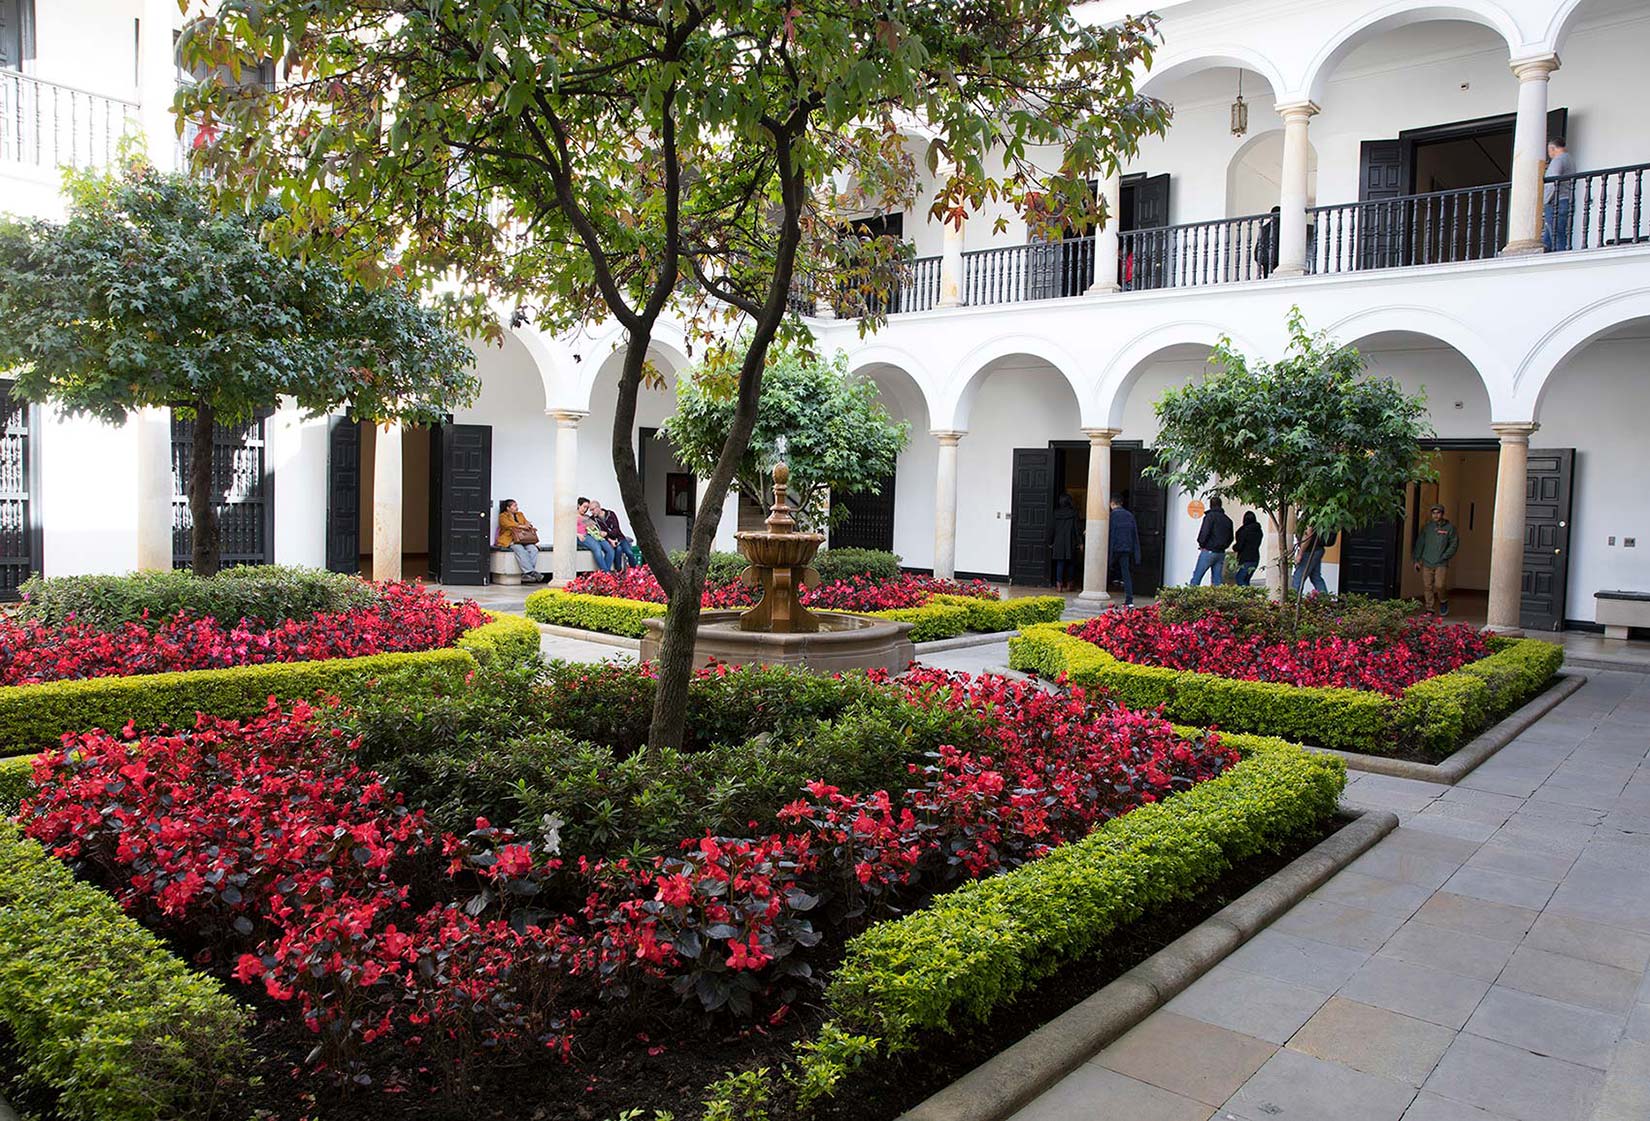 Museo Botero Bogotá